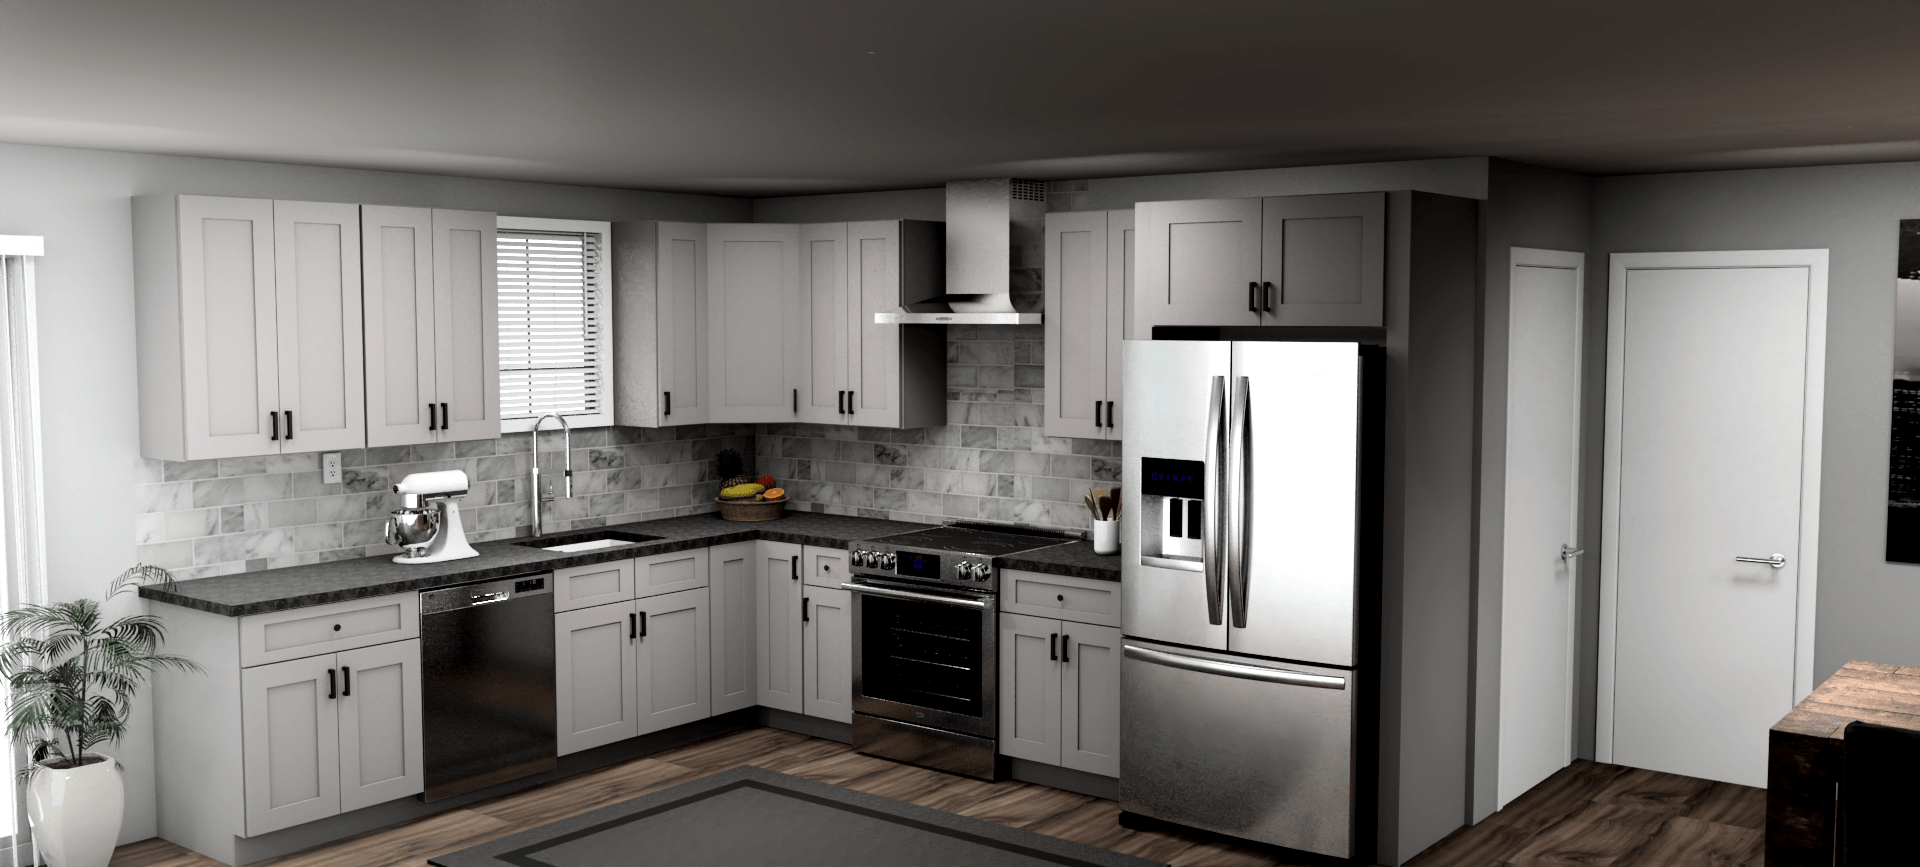 Fabuwood Allure Galaxy Nickel 10 x 12 L Shaped Kitchen Main Layout Photo